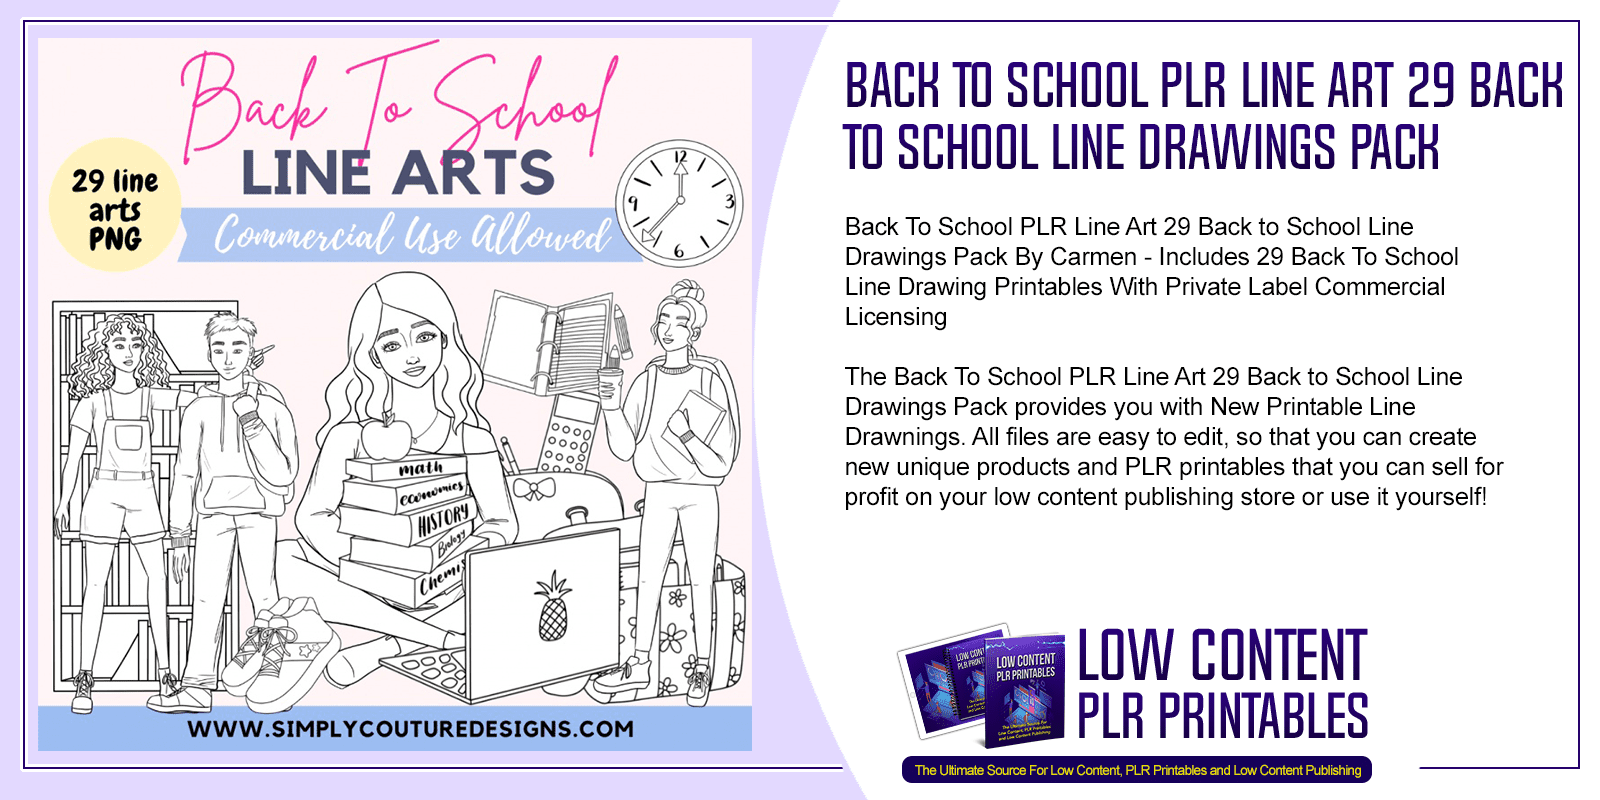 Back To School PLR Line Art 29 Back to School Line Drawings Pack